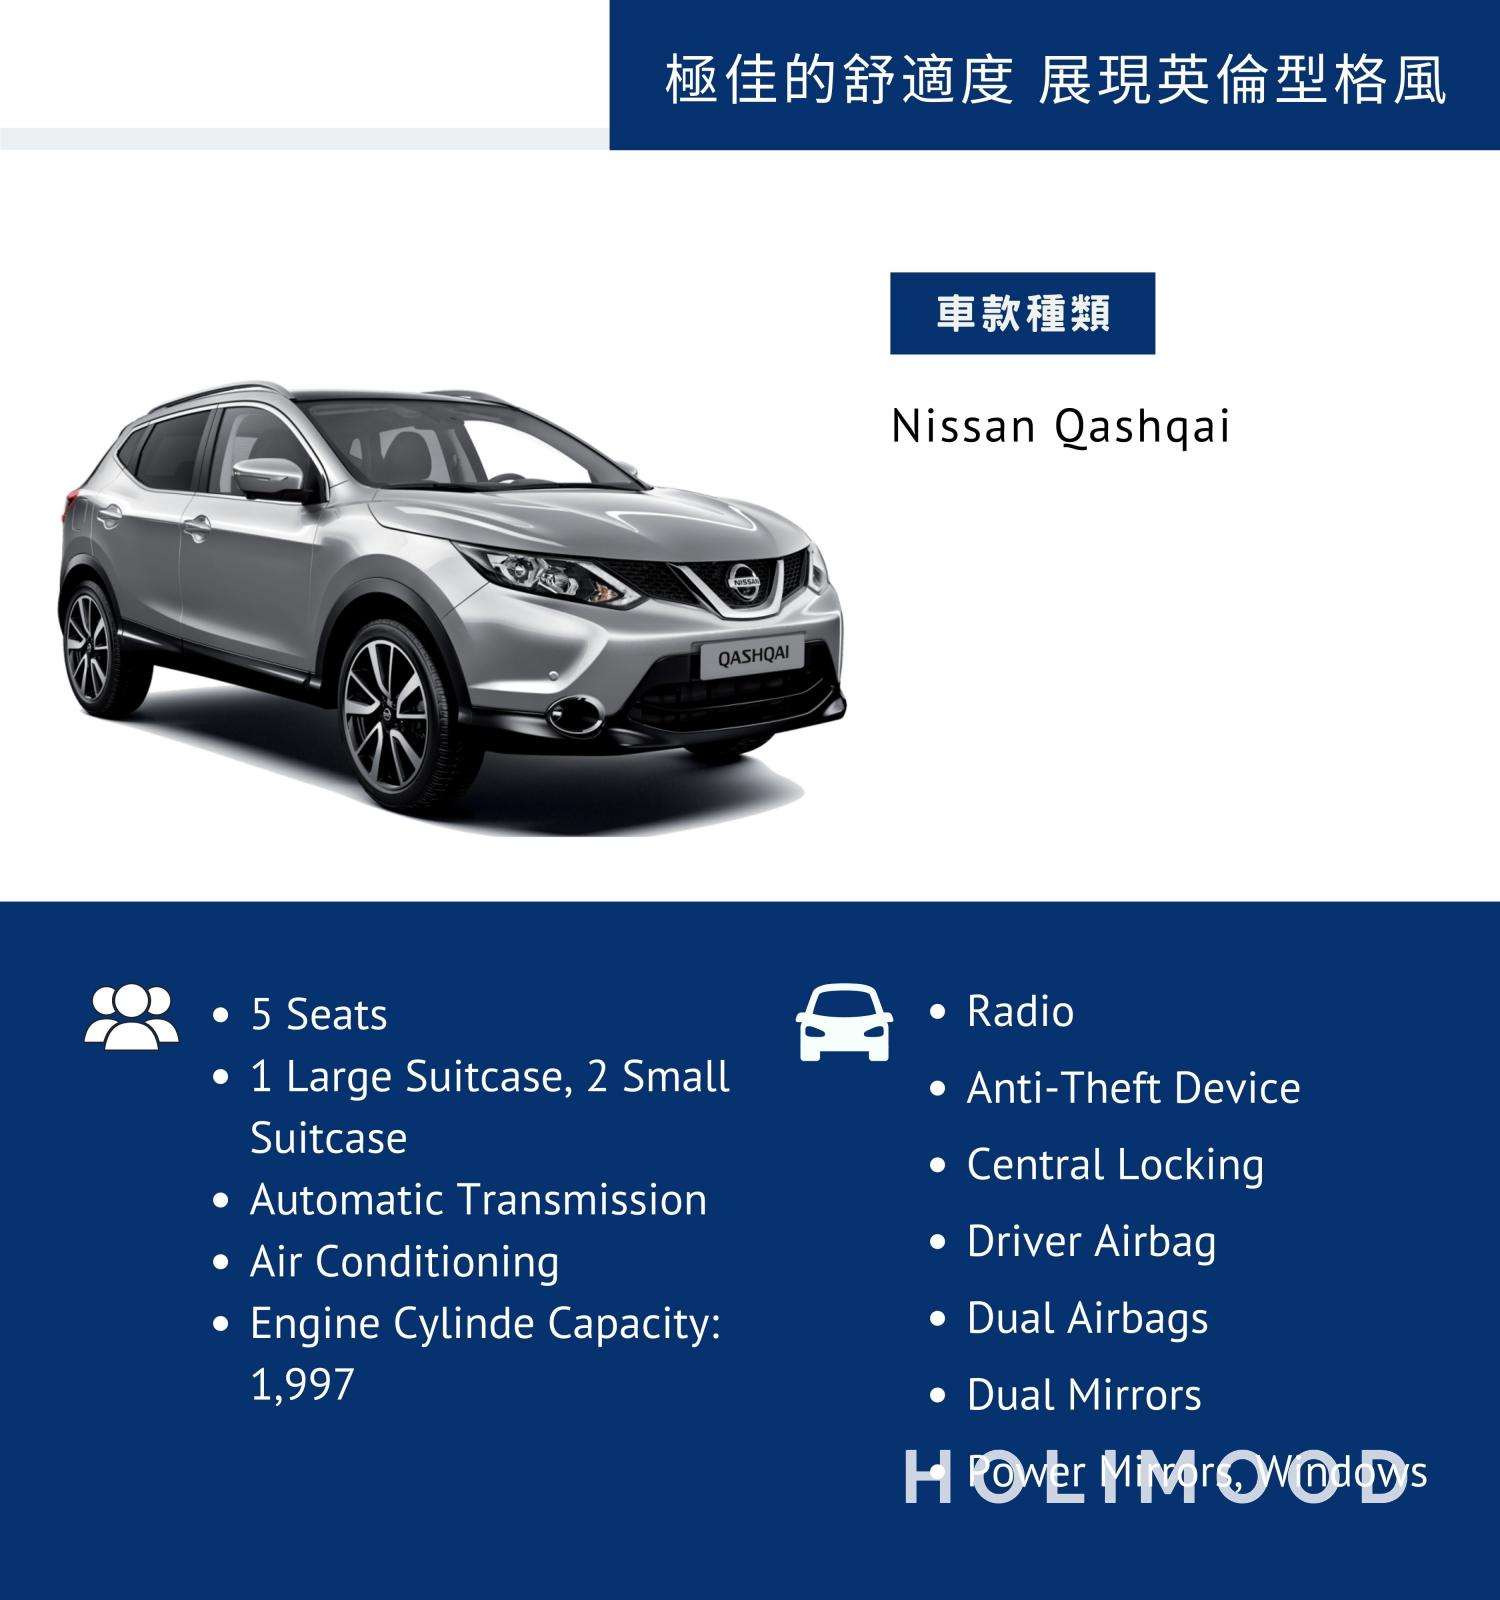 DCH Mobility Car Rent x Holimood Promotion 【五年內新車】Nissan Qashqai - 務實慳油5人車 (月租) 2